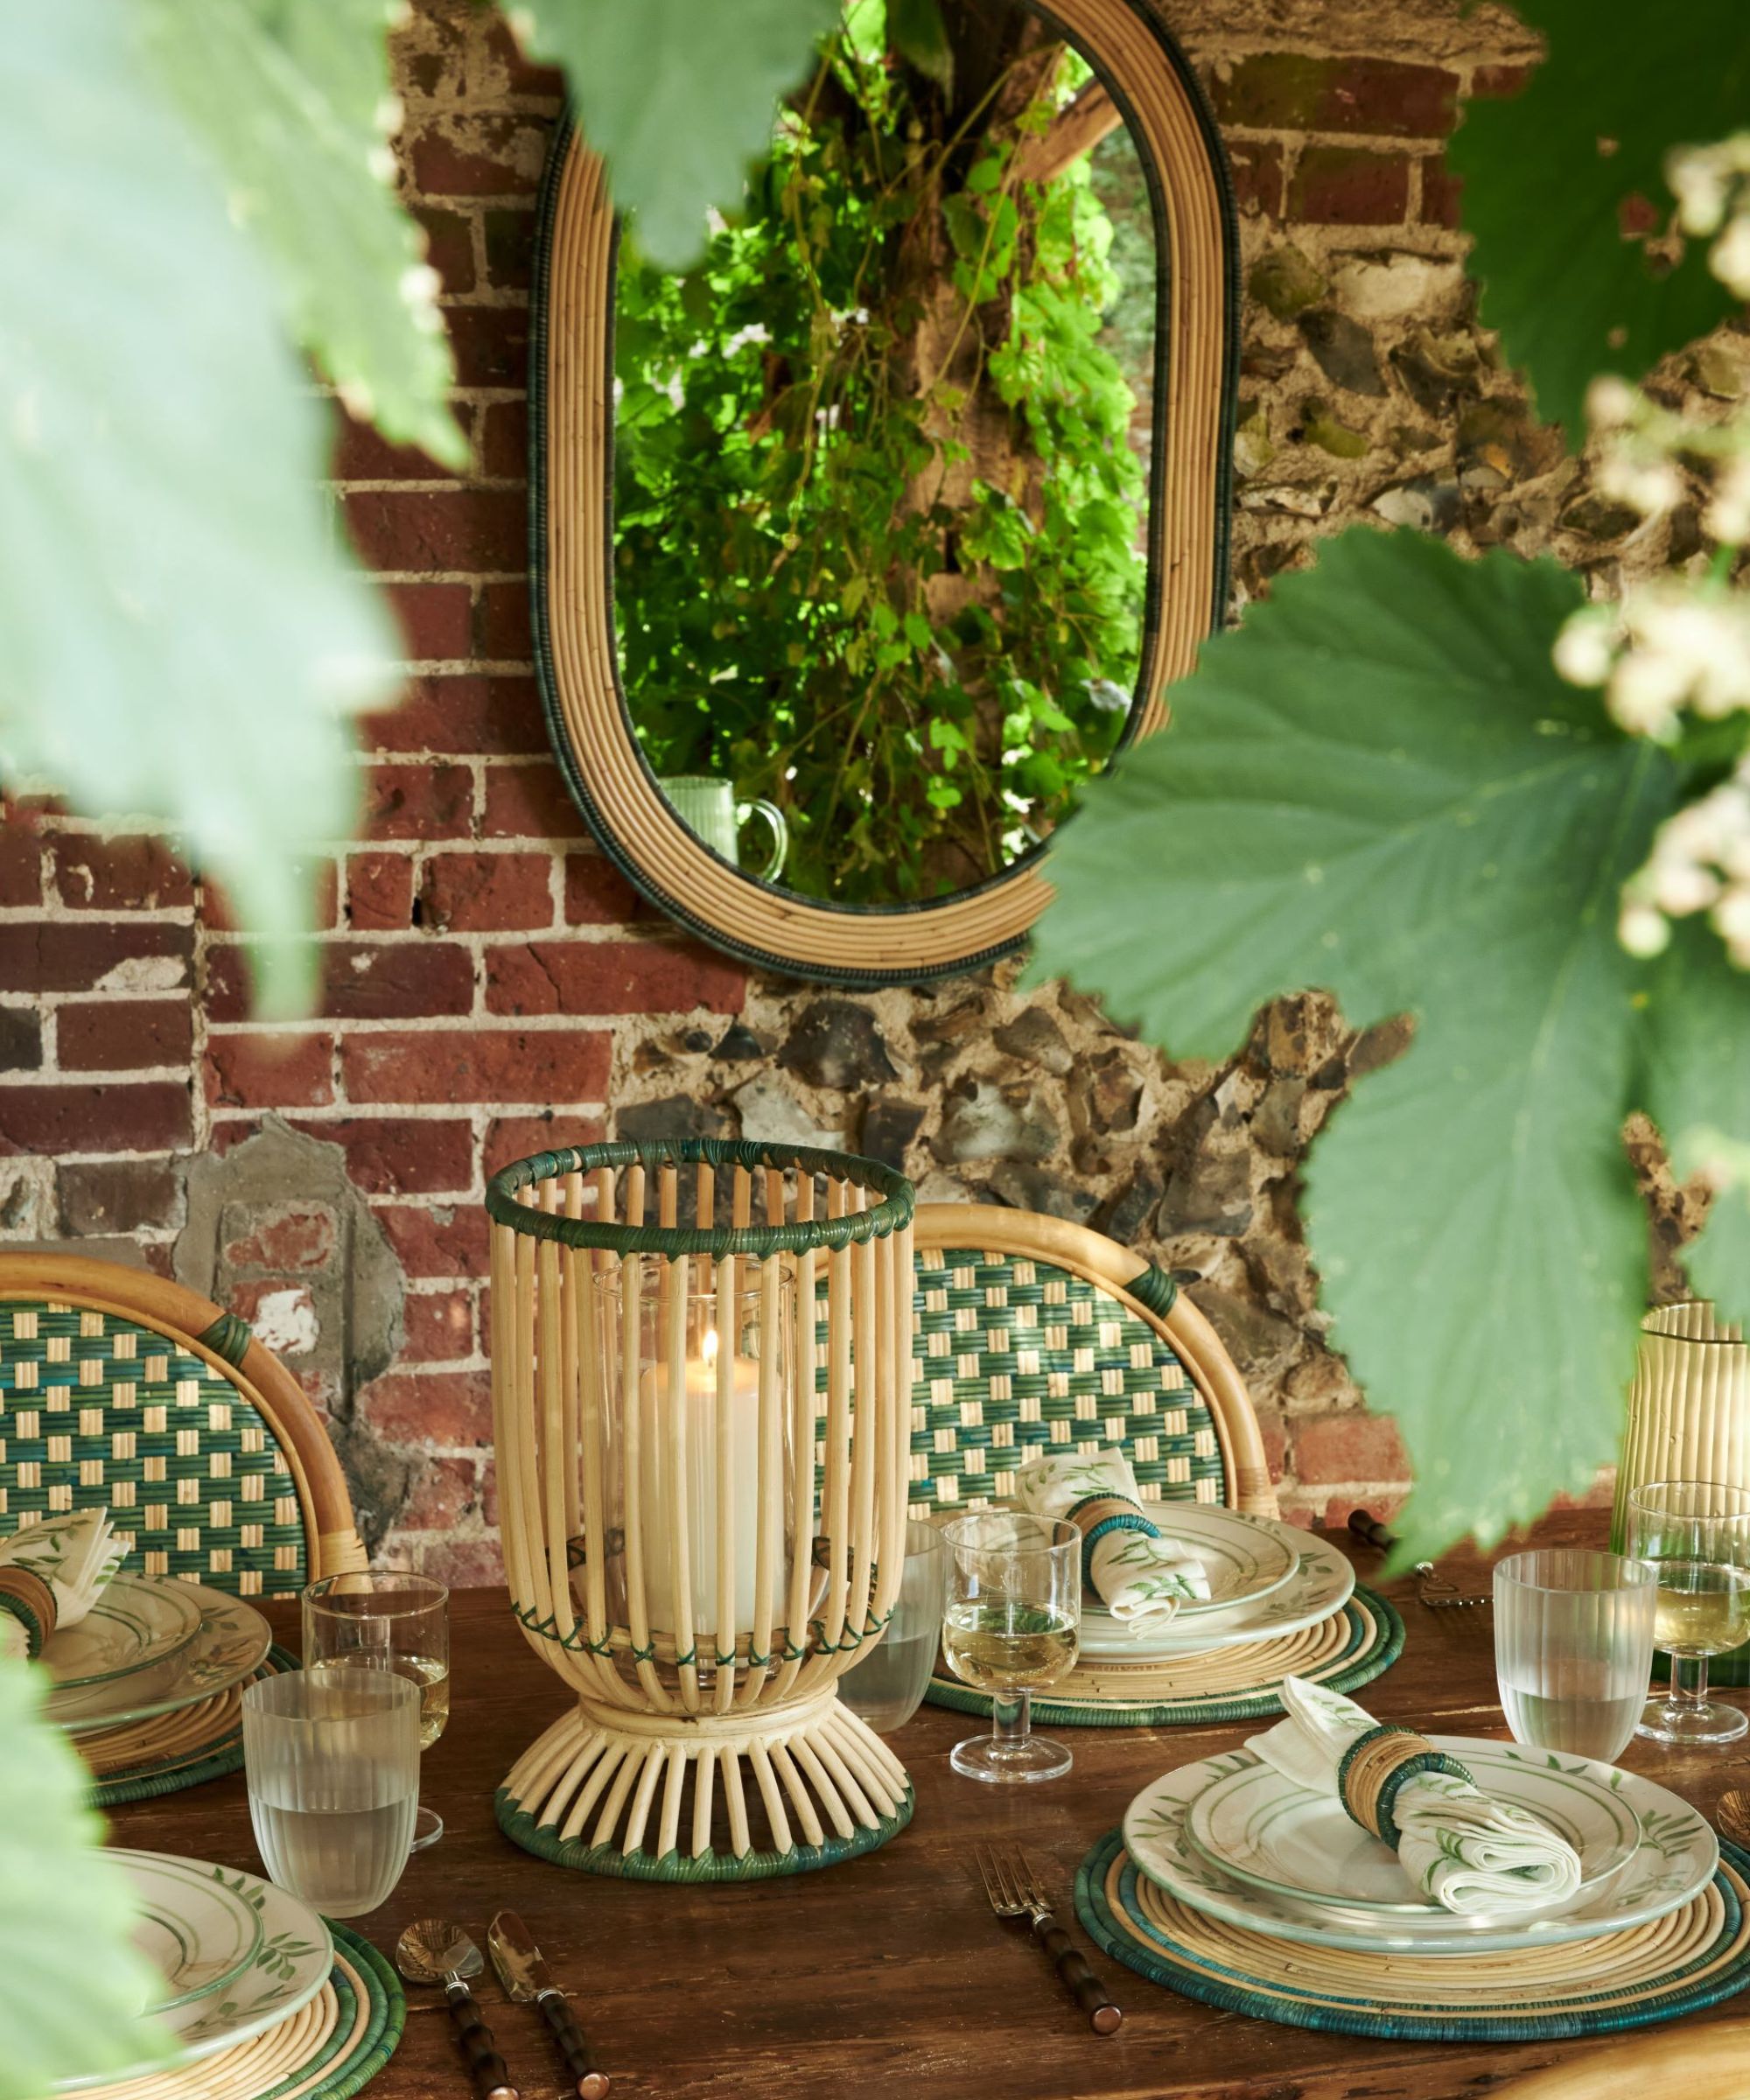 Green and bamboo rattan garden table setting